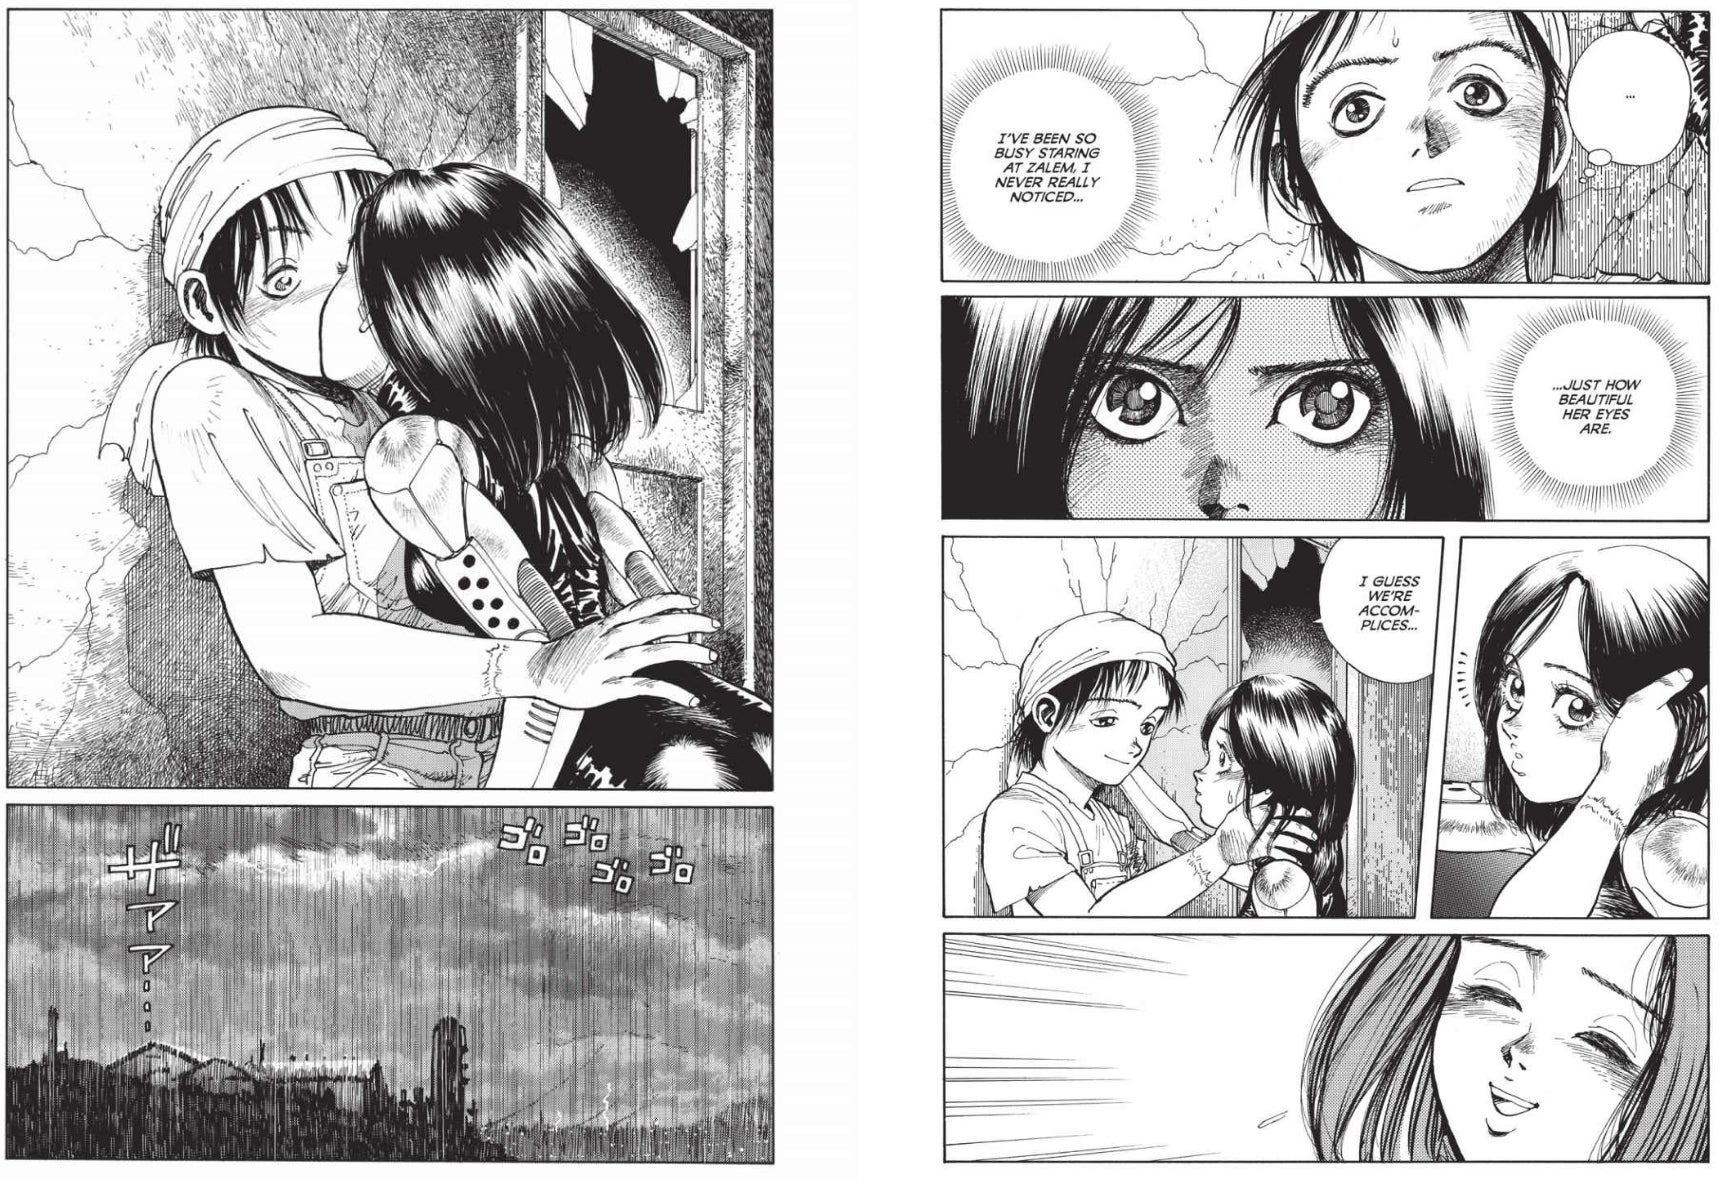 The Battle Angel Alita Manga Is An Essential Read